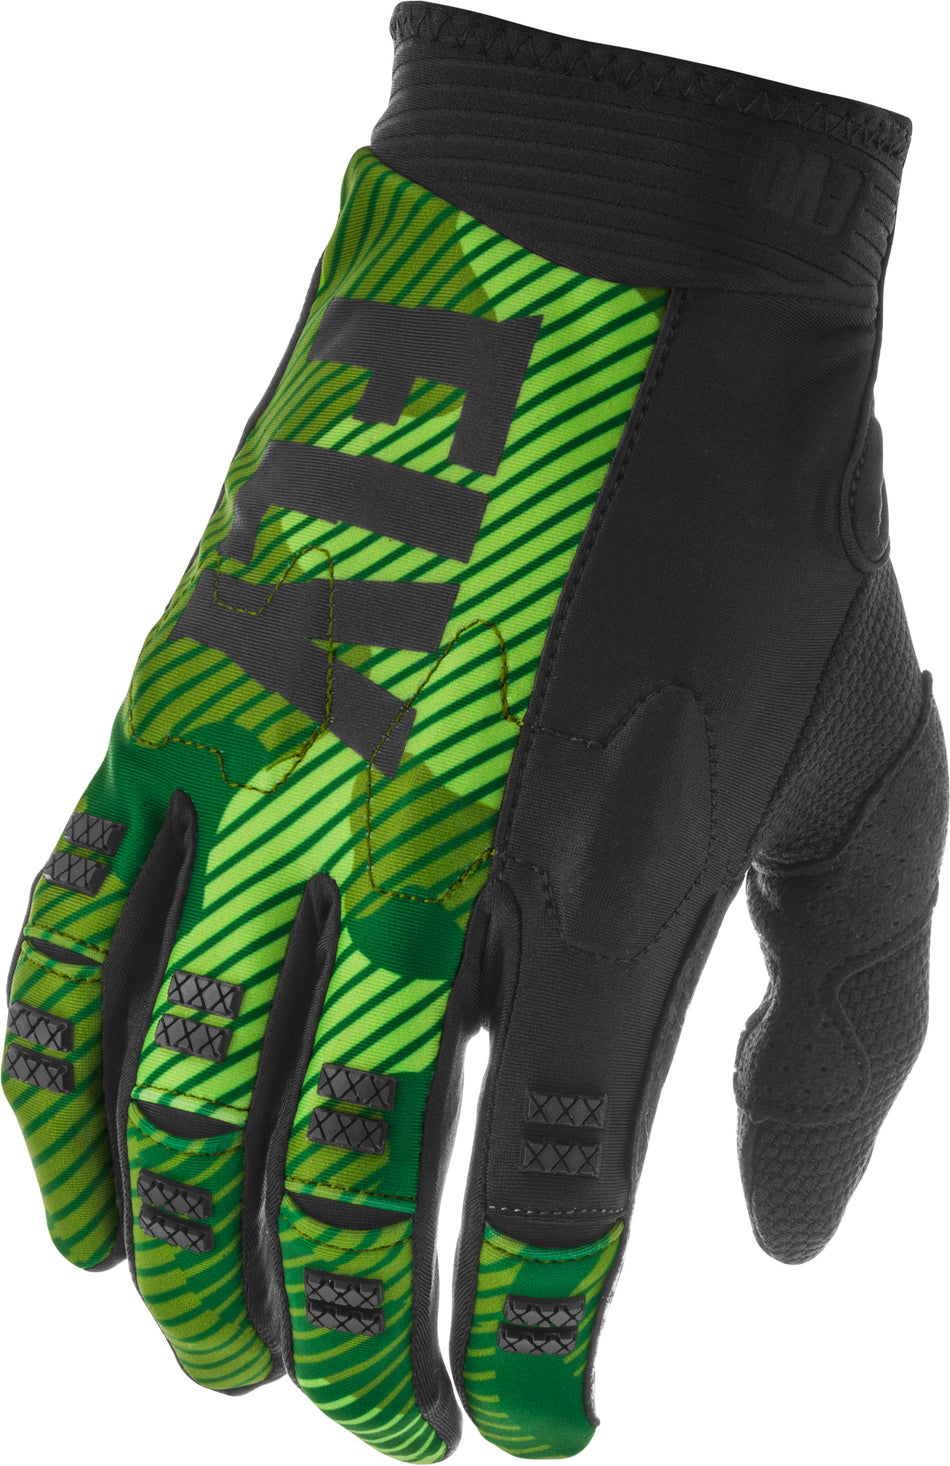 FLY RACING Evolution Gloves Green/Black Sz 06 373-11406